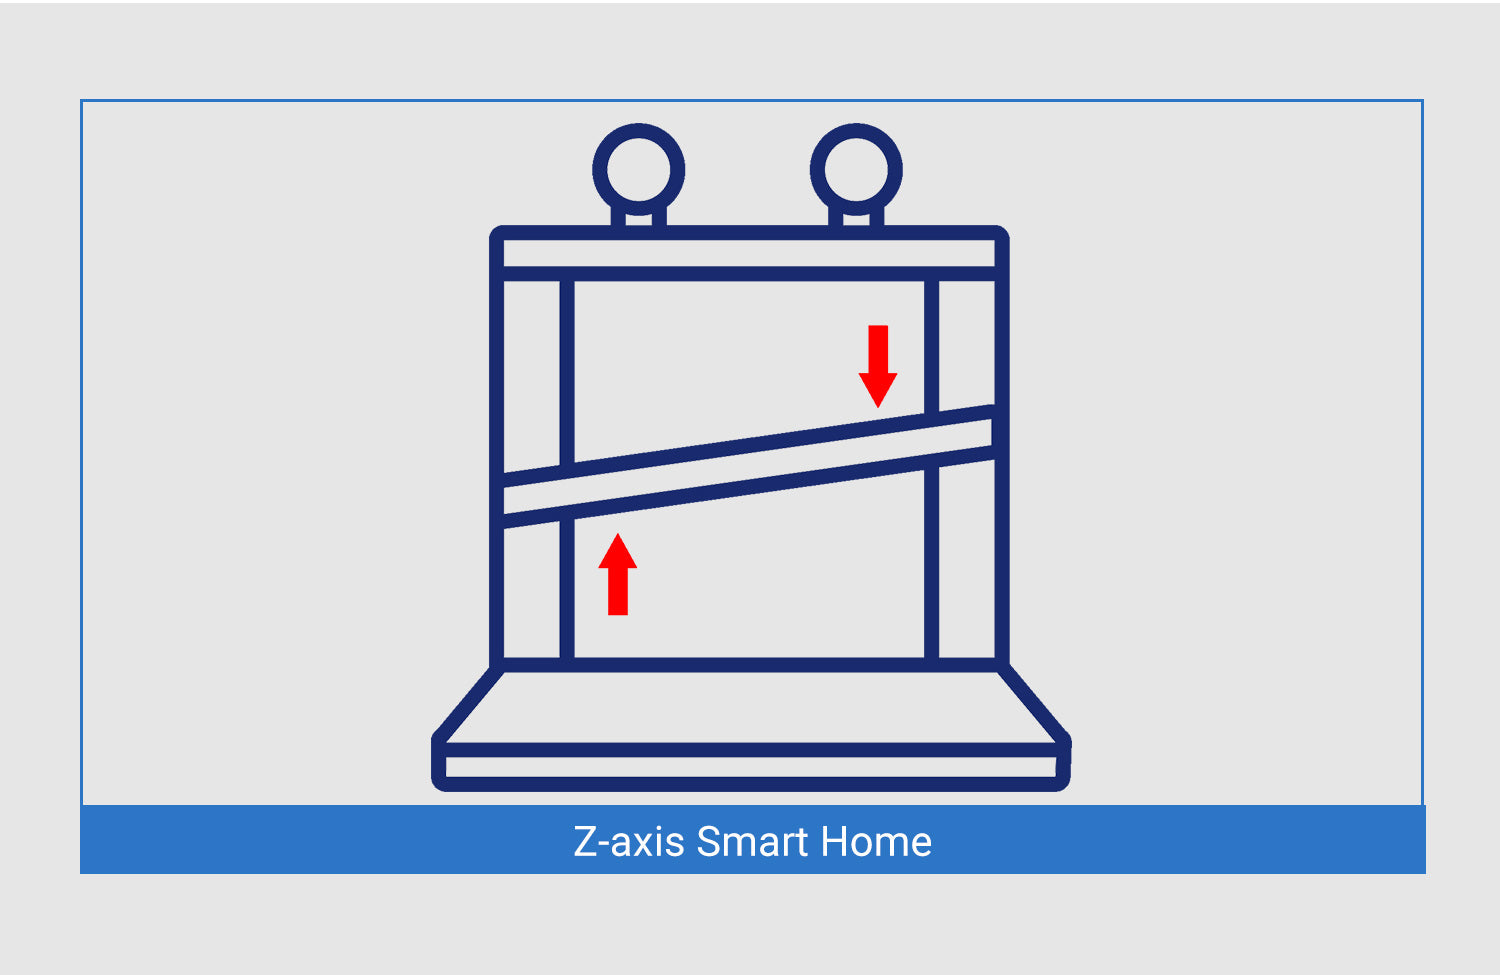 TL-D5 Z-axis Smart Home